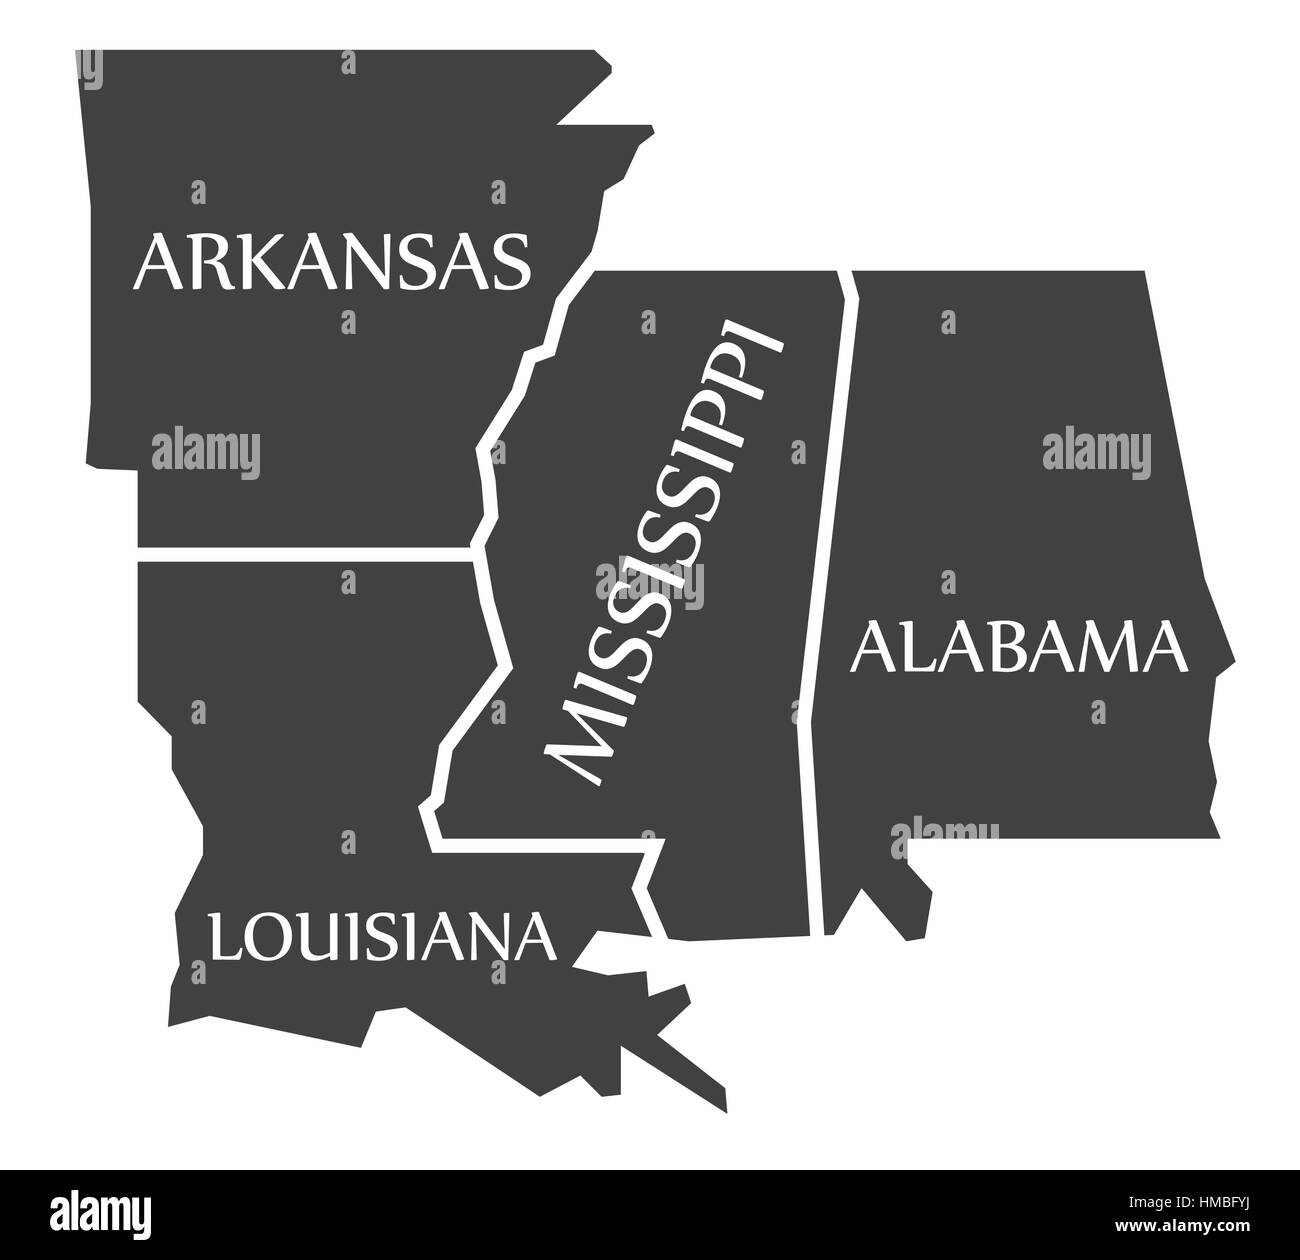 Arkansas - Louisiana - Mississippi - Alabama Map labelled black Stock Vector Art & Illustration ...